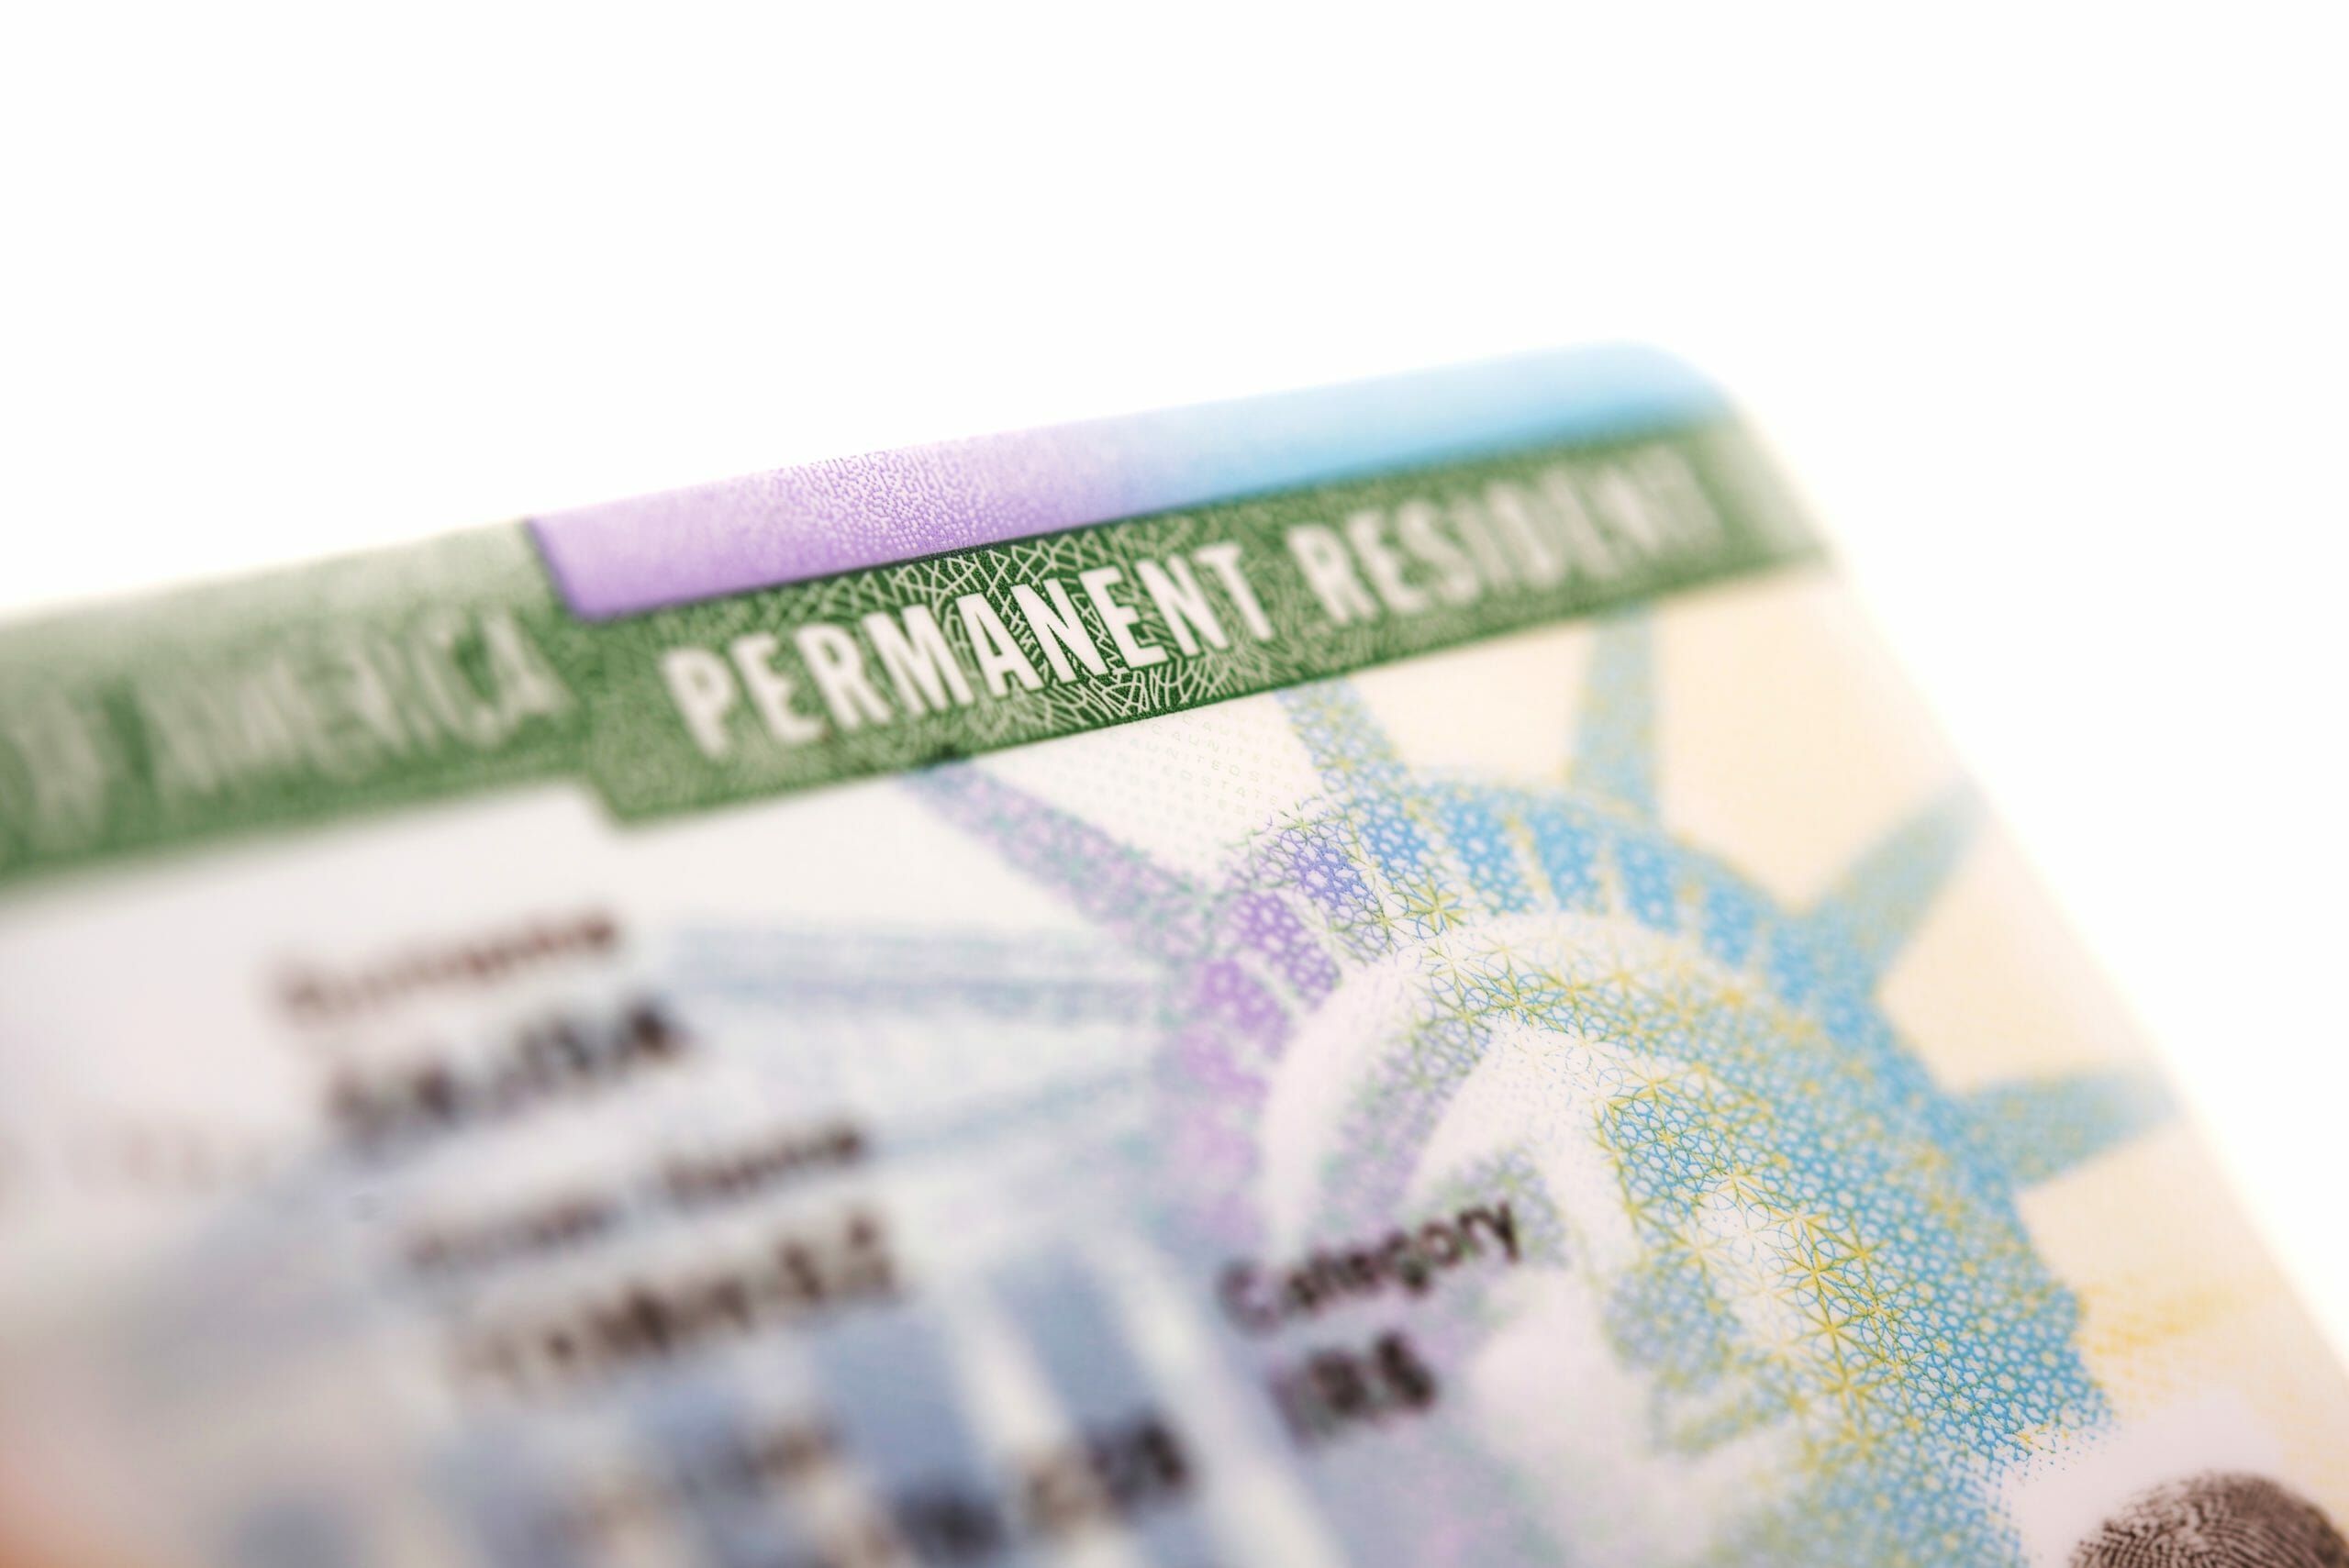 Permanent Resident Green Card